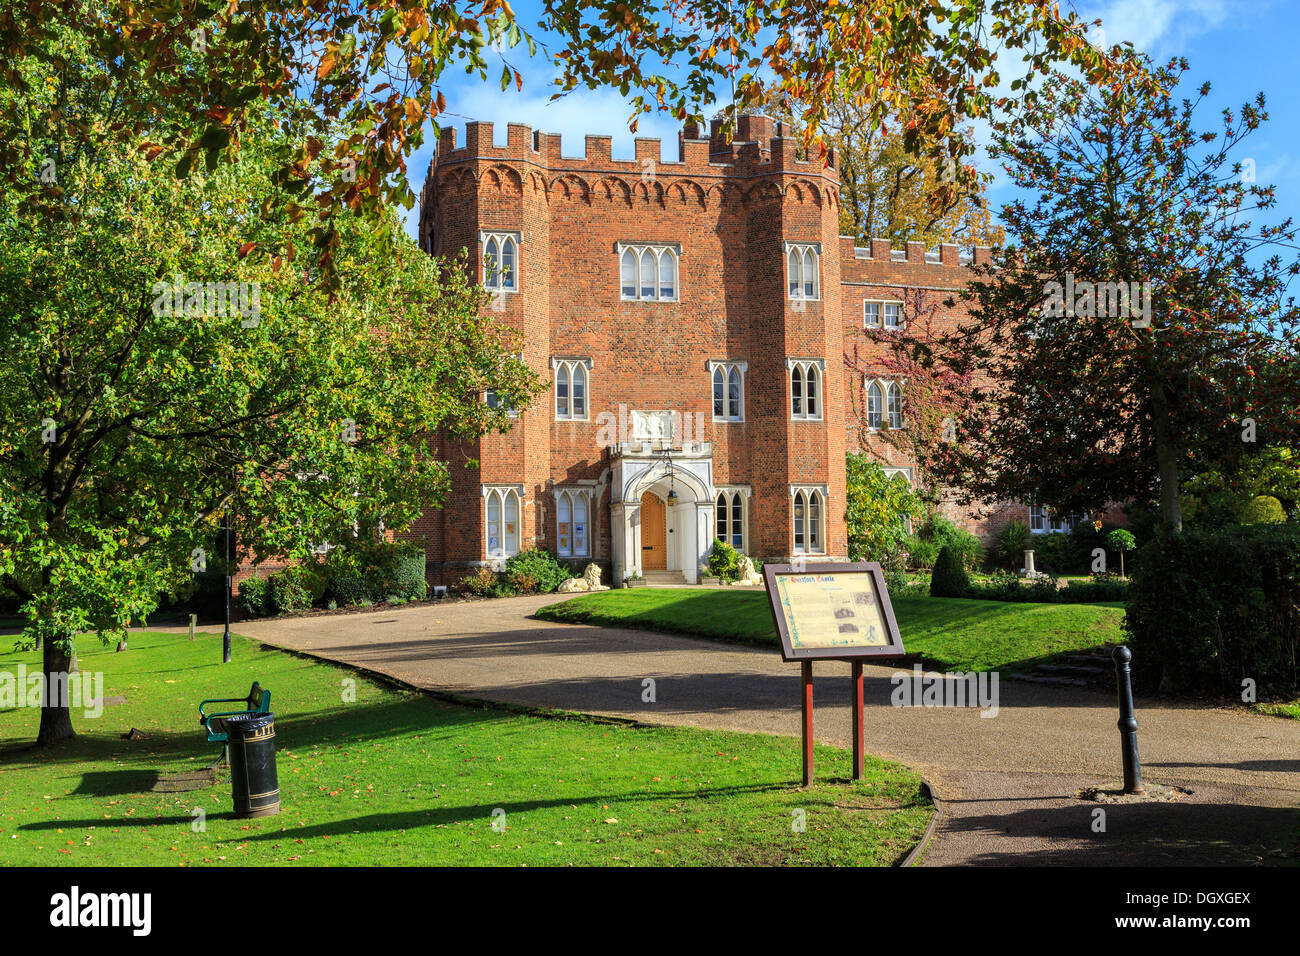 Parc du château de hertford Hertfordshire England uk go Banque D'Images